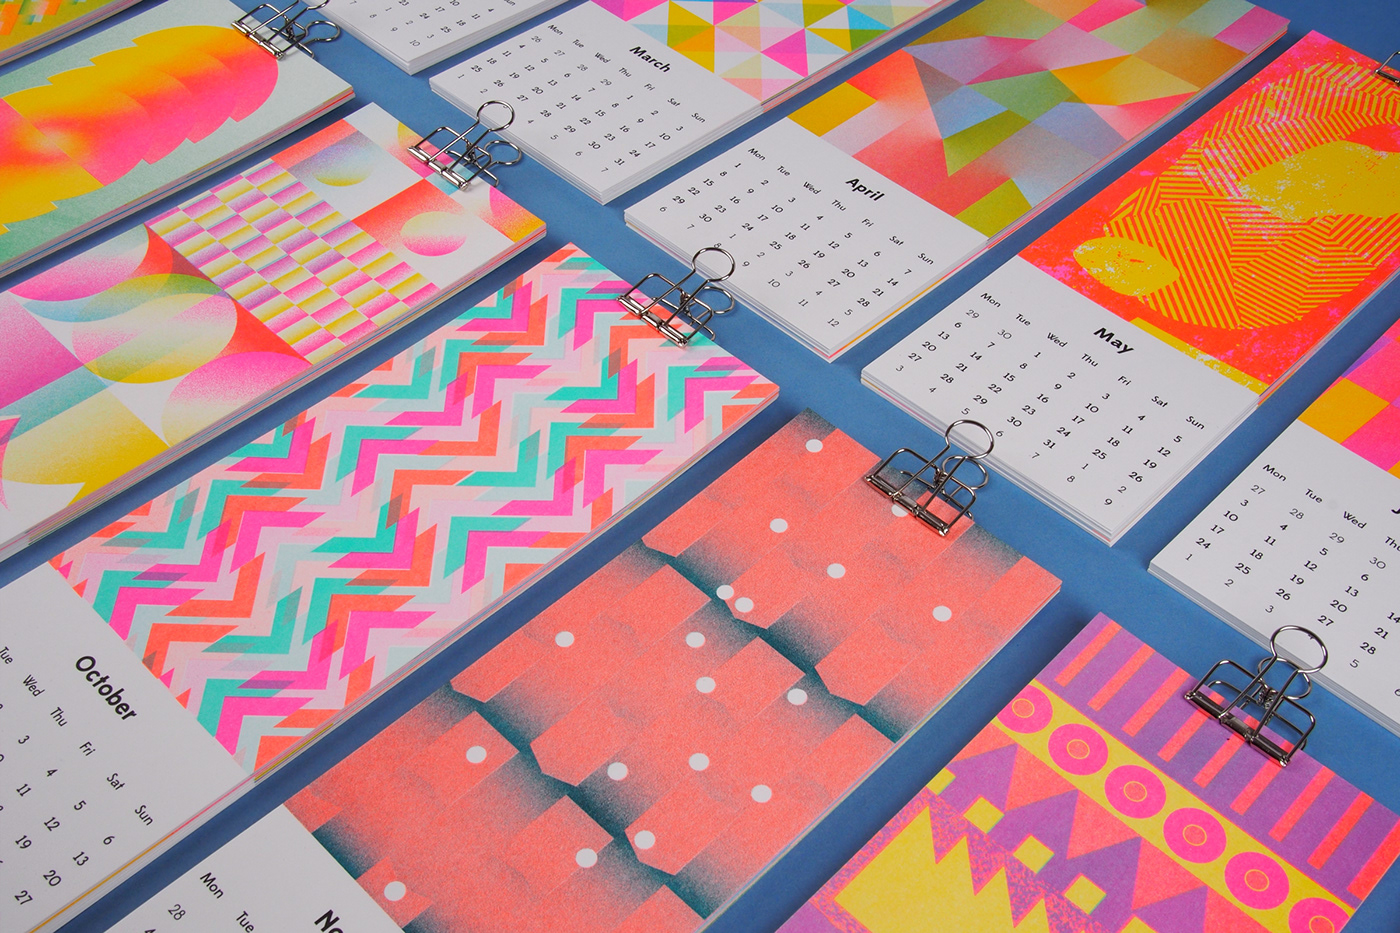 calendar calendar design colors gradients texture print Layout colorful abstract risograph